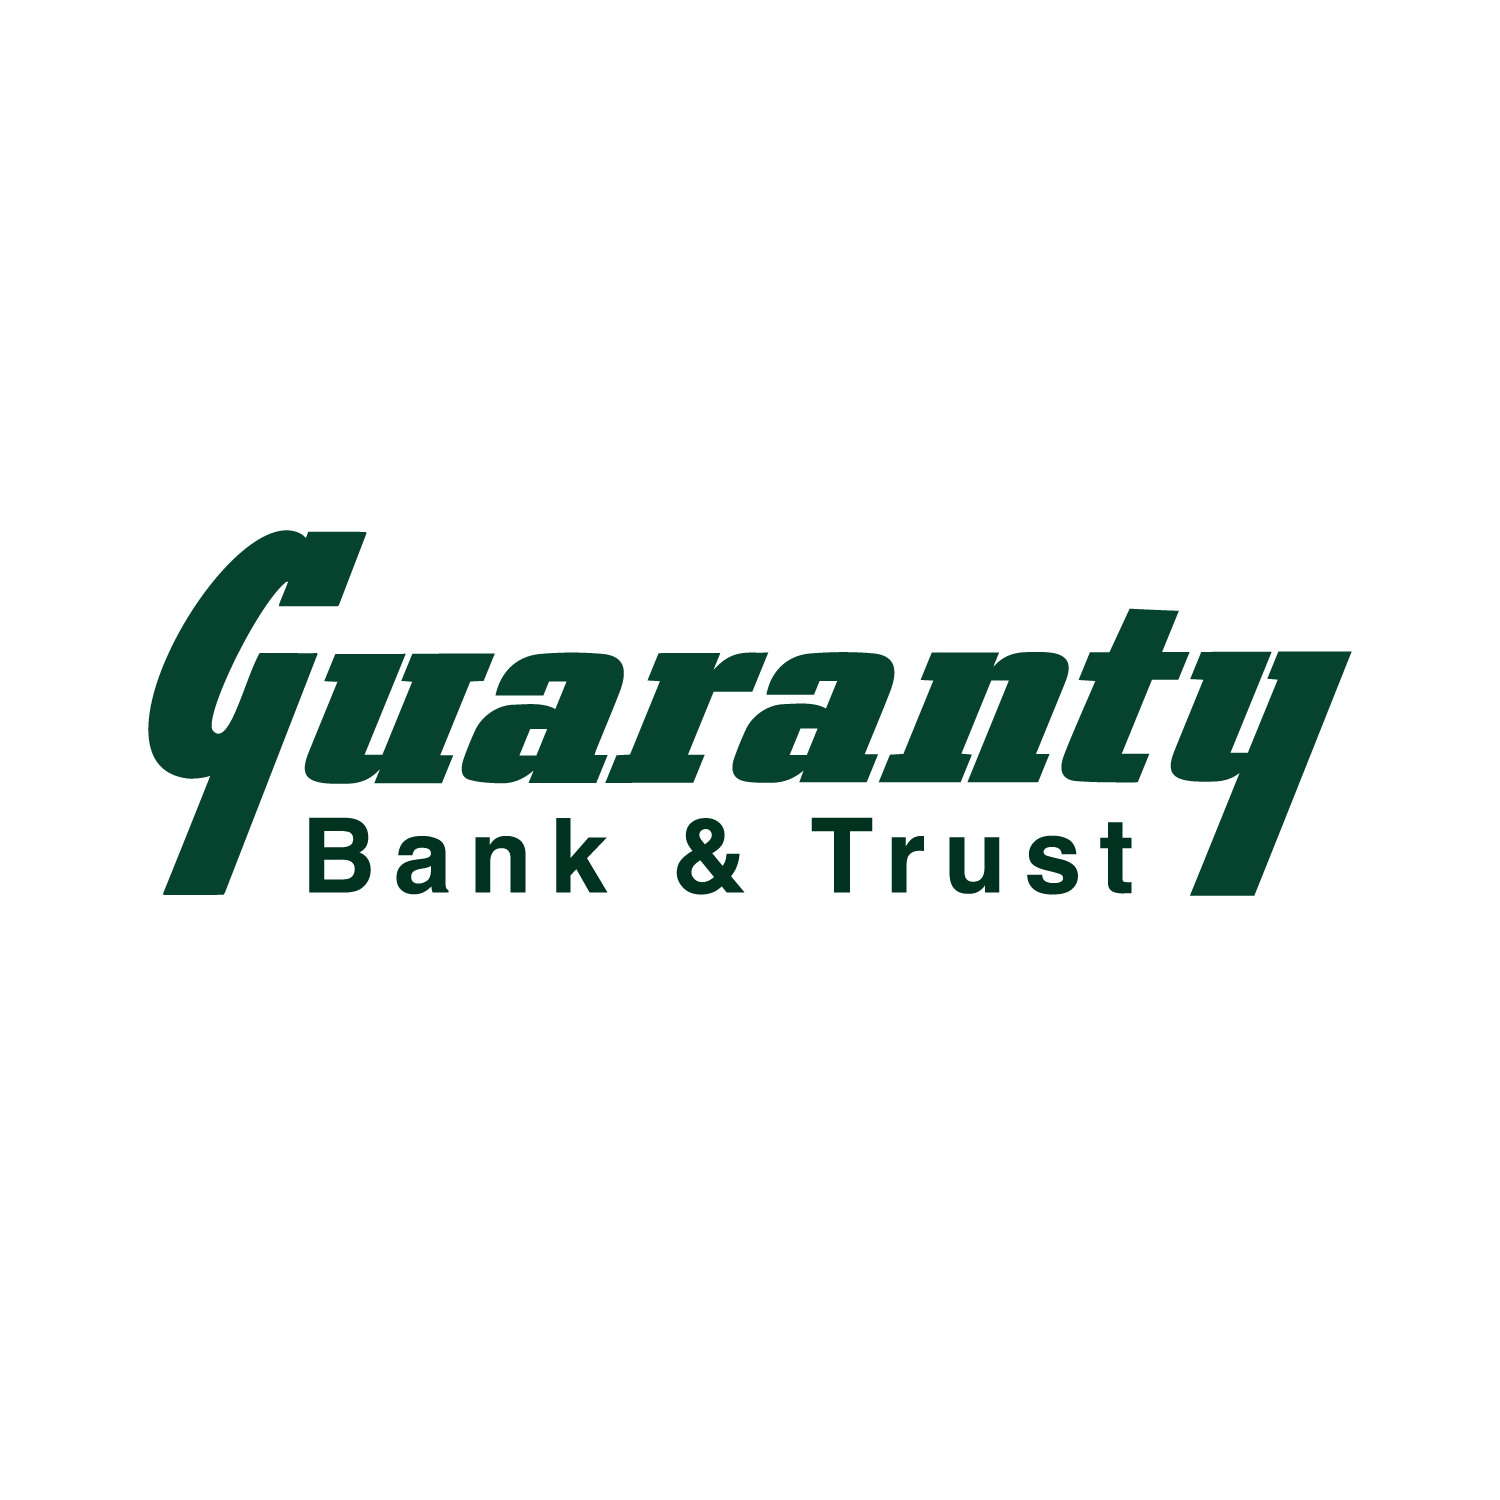 Guaranty Bank & Trust - Houston, TX 77027 - (713)559-2225 | ShowMeLocal.com